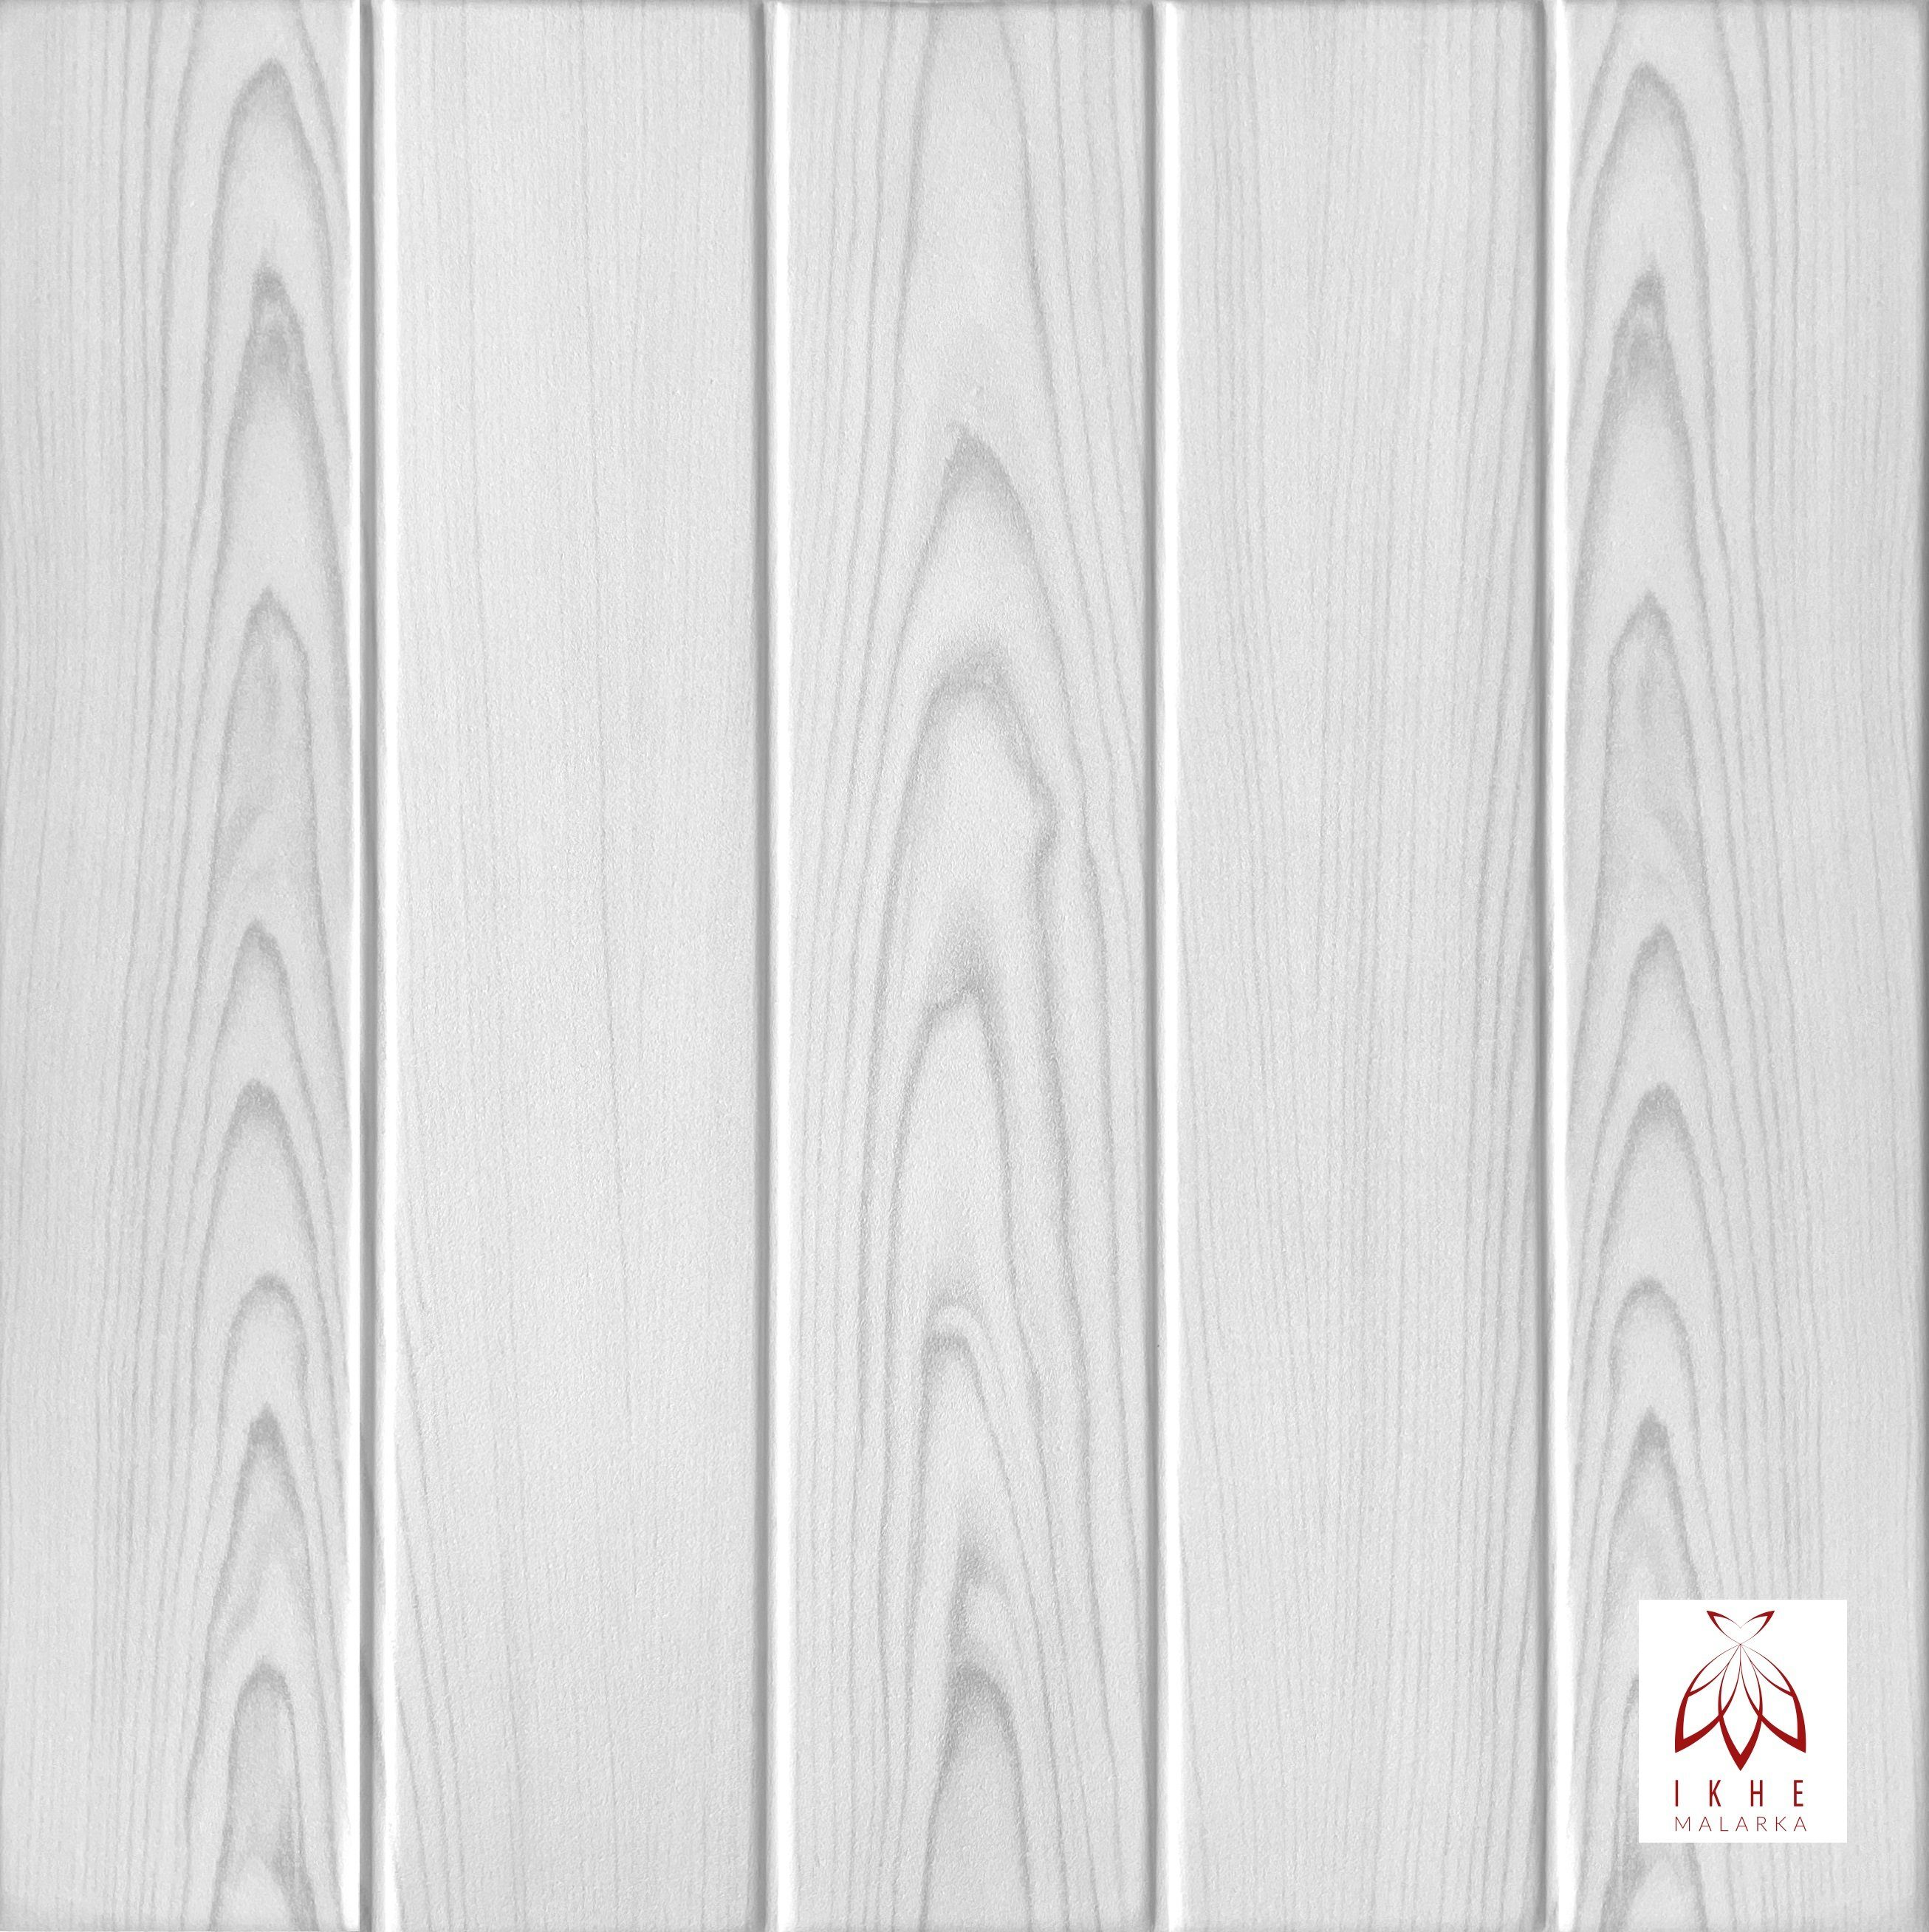 IKHEMalarka 3D Wandpaneel 3D Wandpaneele Wandverkleidung Deckenpaneele, 0,25 qm, Holz Optik Polystyrol MATERIAL STYROPOR ARTIGES! (4qm = 16 Stück) 0204